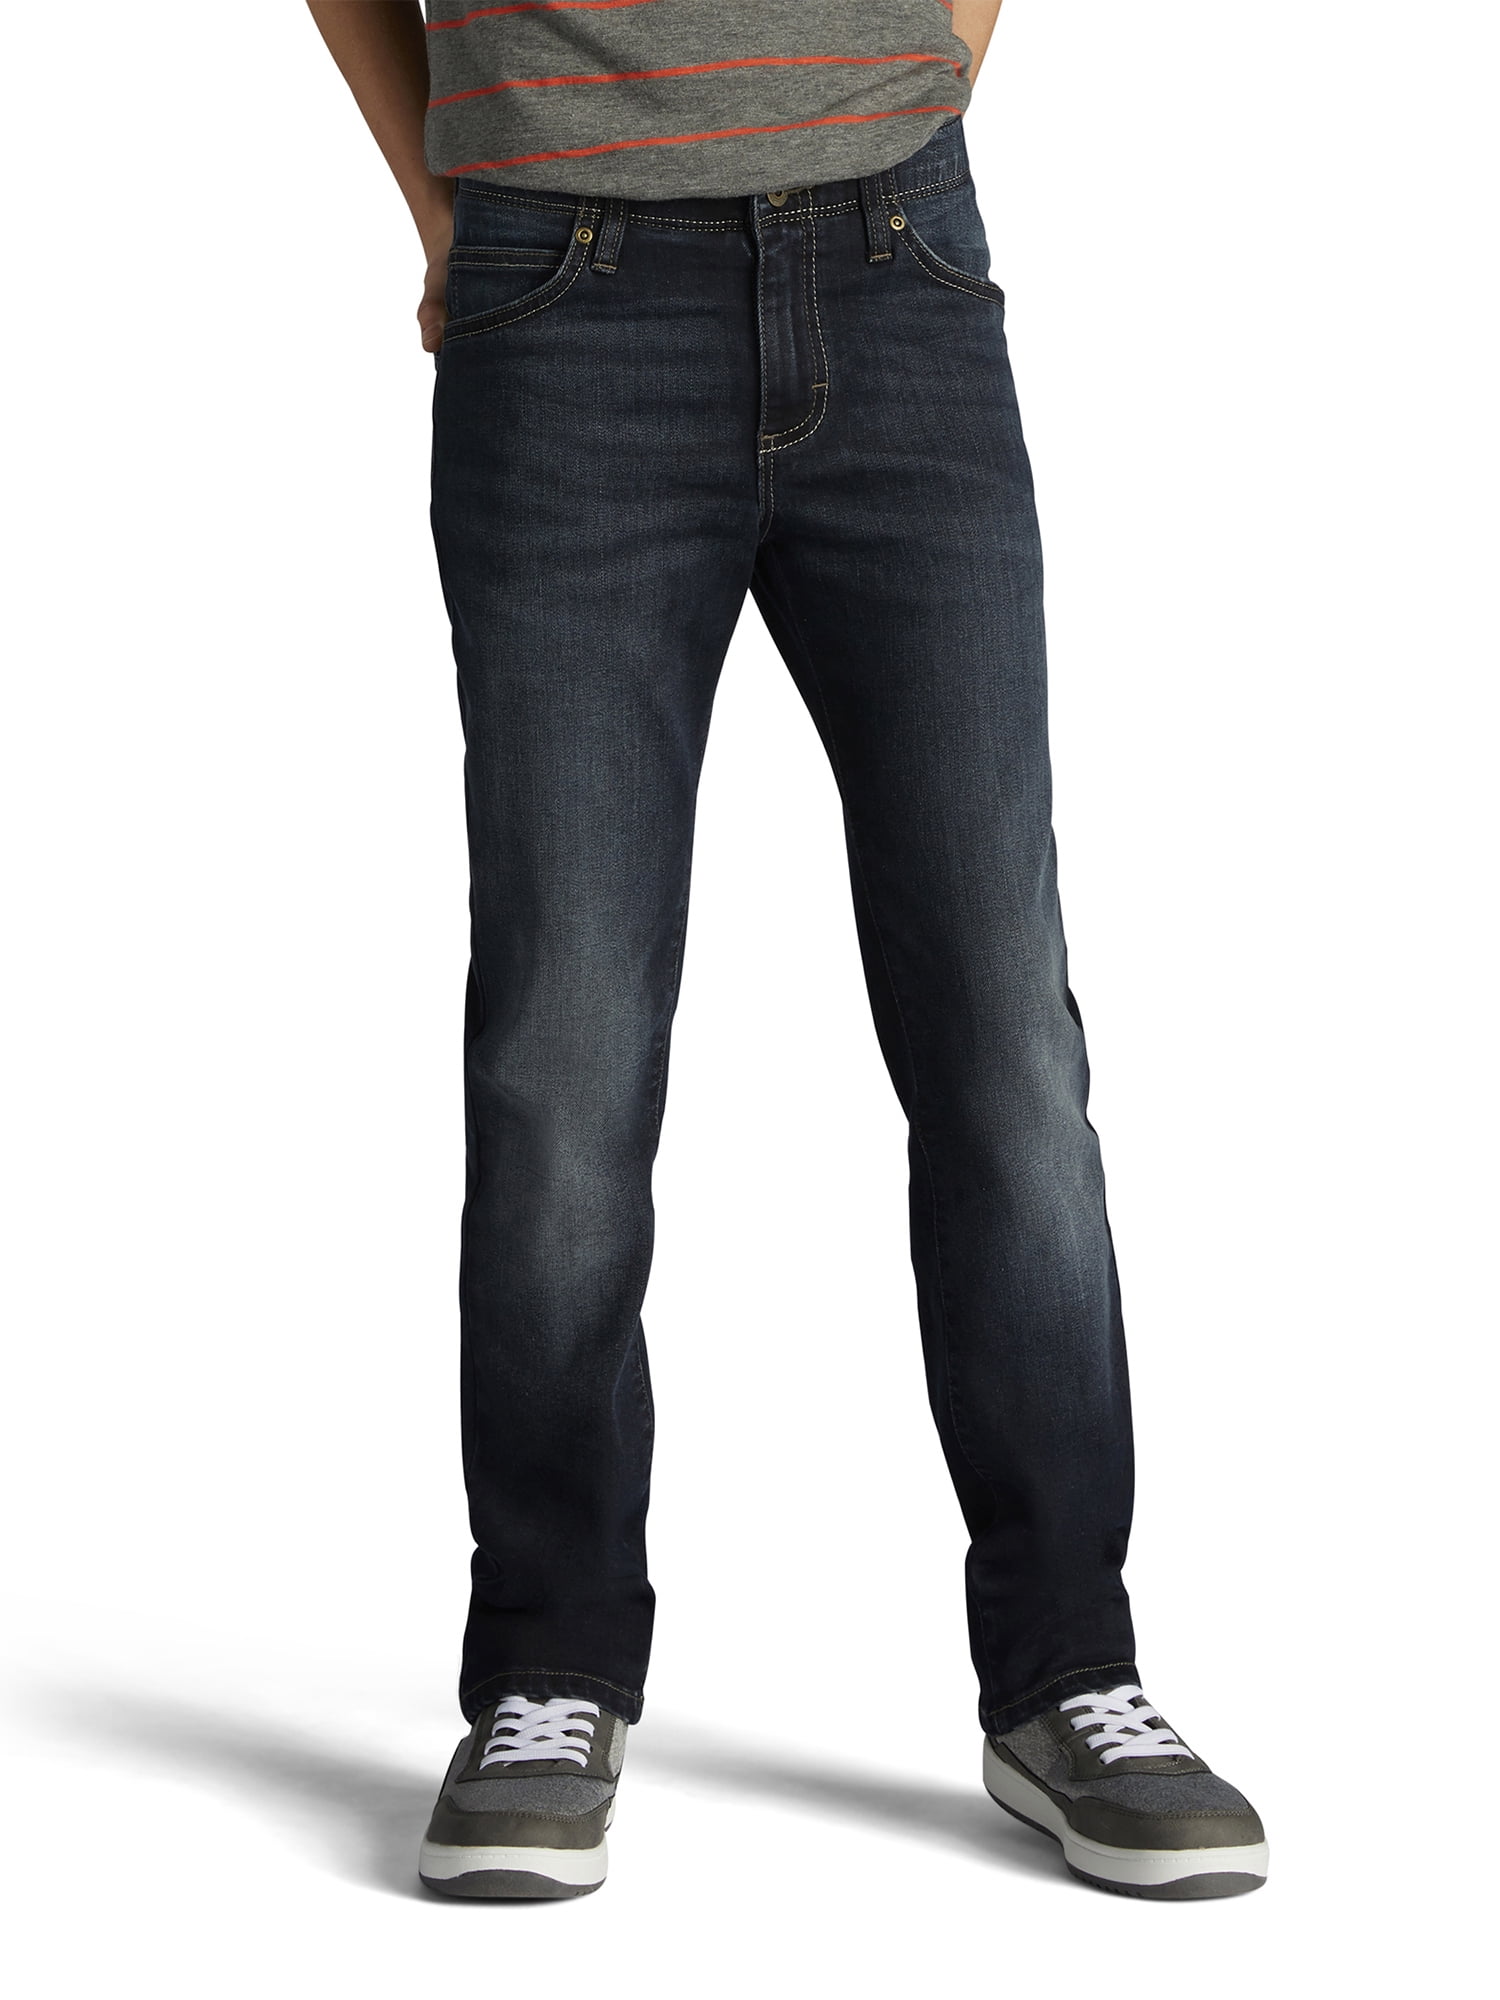 Lee Boys Sport Xtreme Comfort Slim Fit Jeans, Sizes 4-18 & Husky 